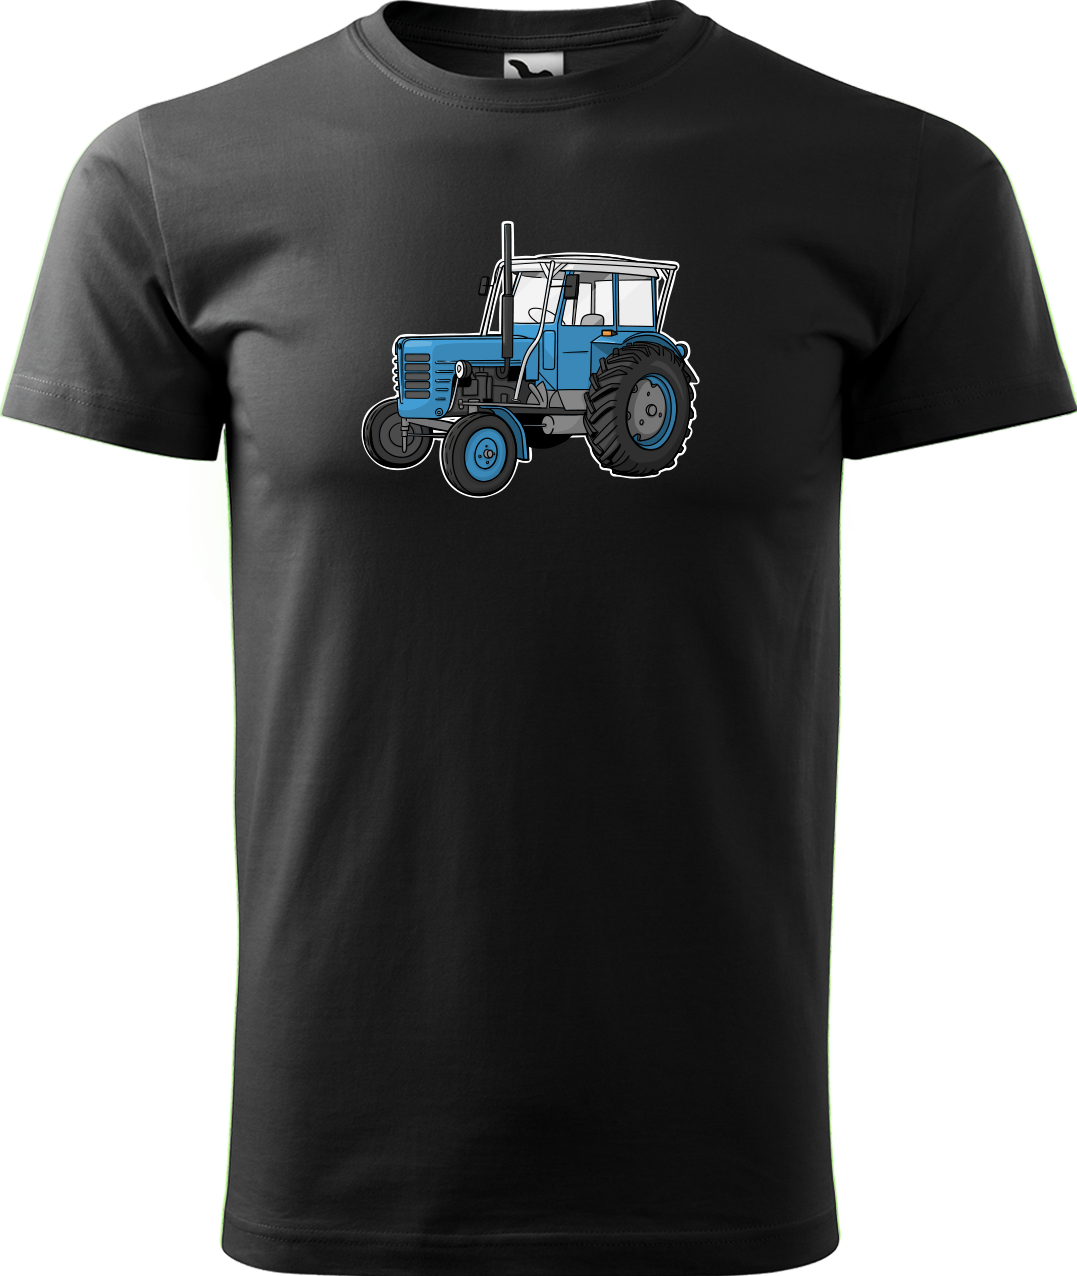 Tričko s traktorem - Starý traktor Velikost: L, Barva: Černá (01)